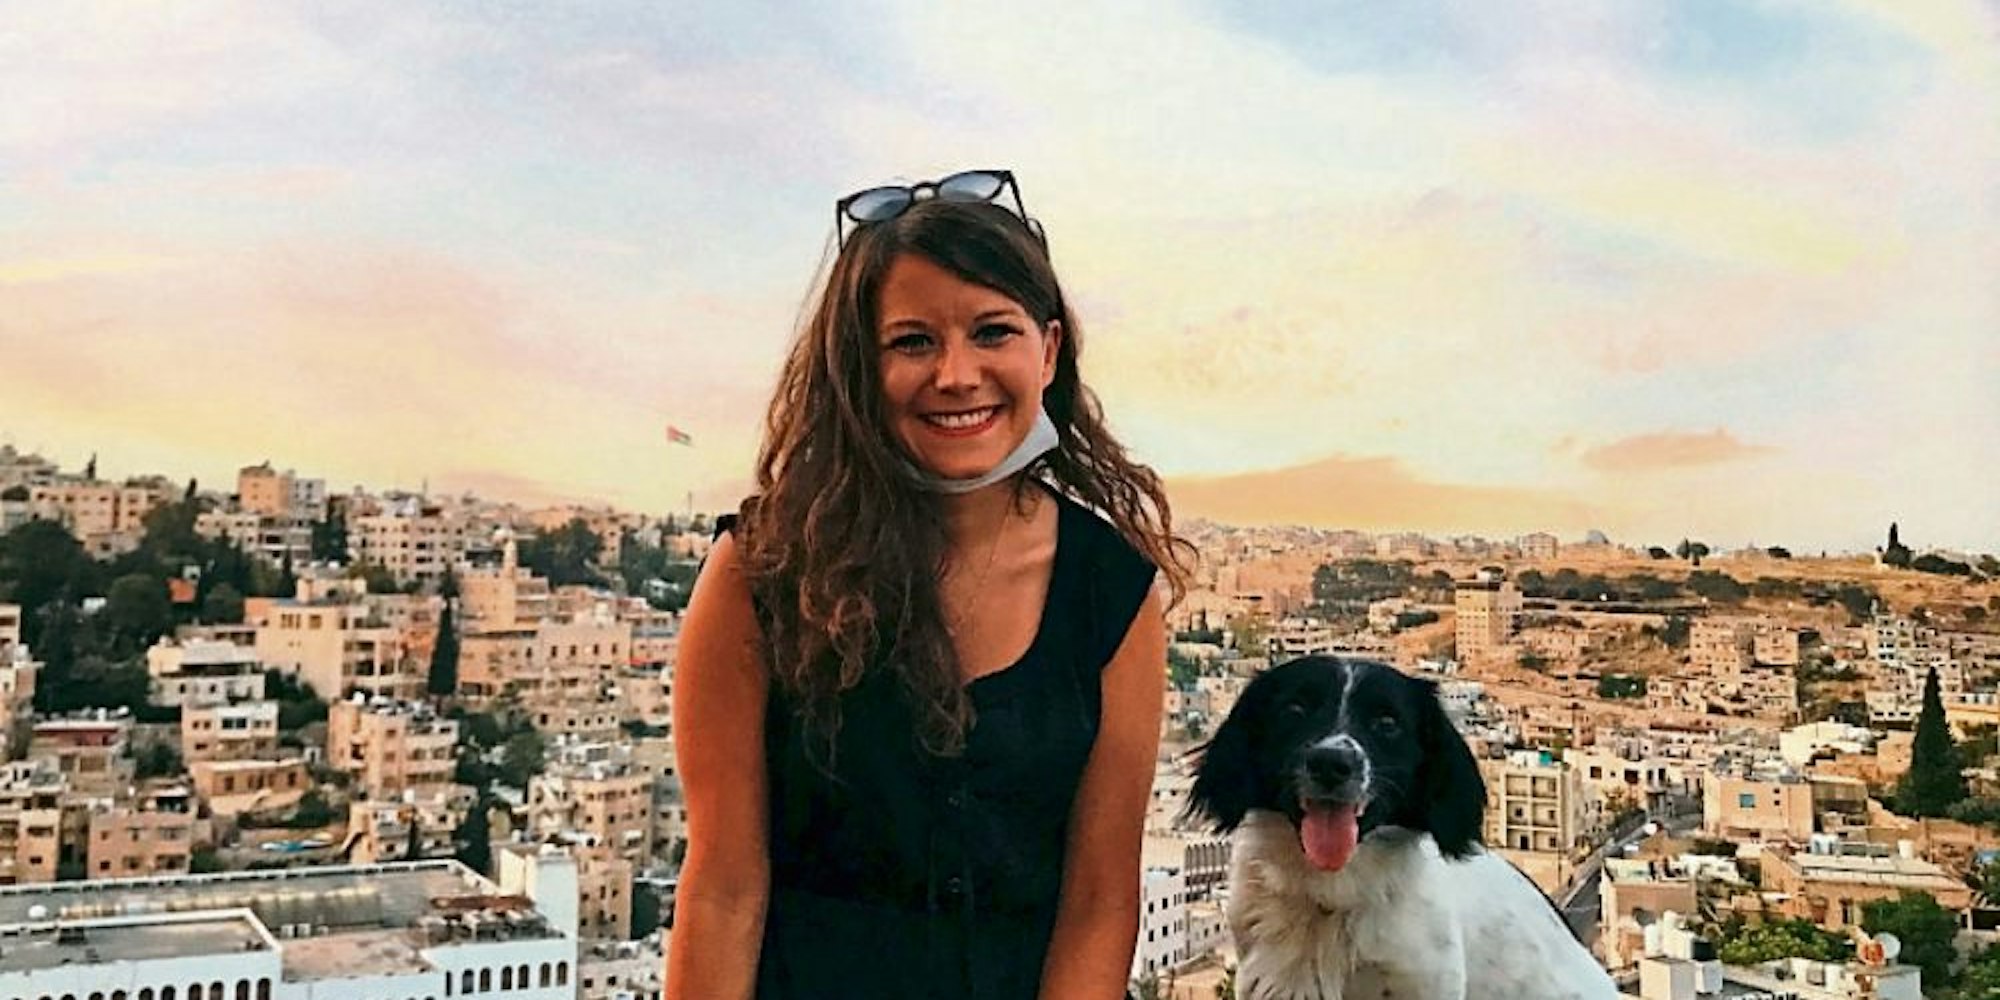 Luisa Schlierf vor dem Panorama der jordanischen Hauptstadt